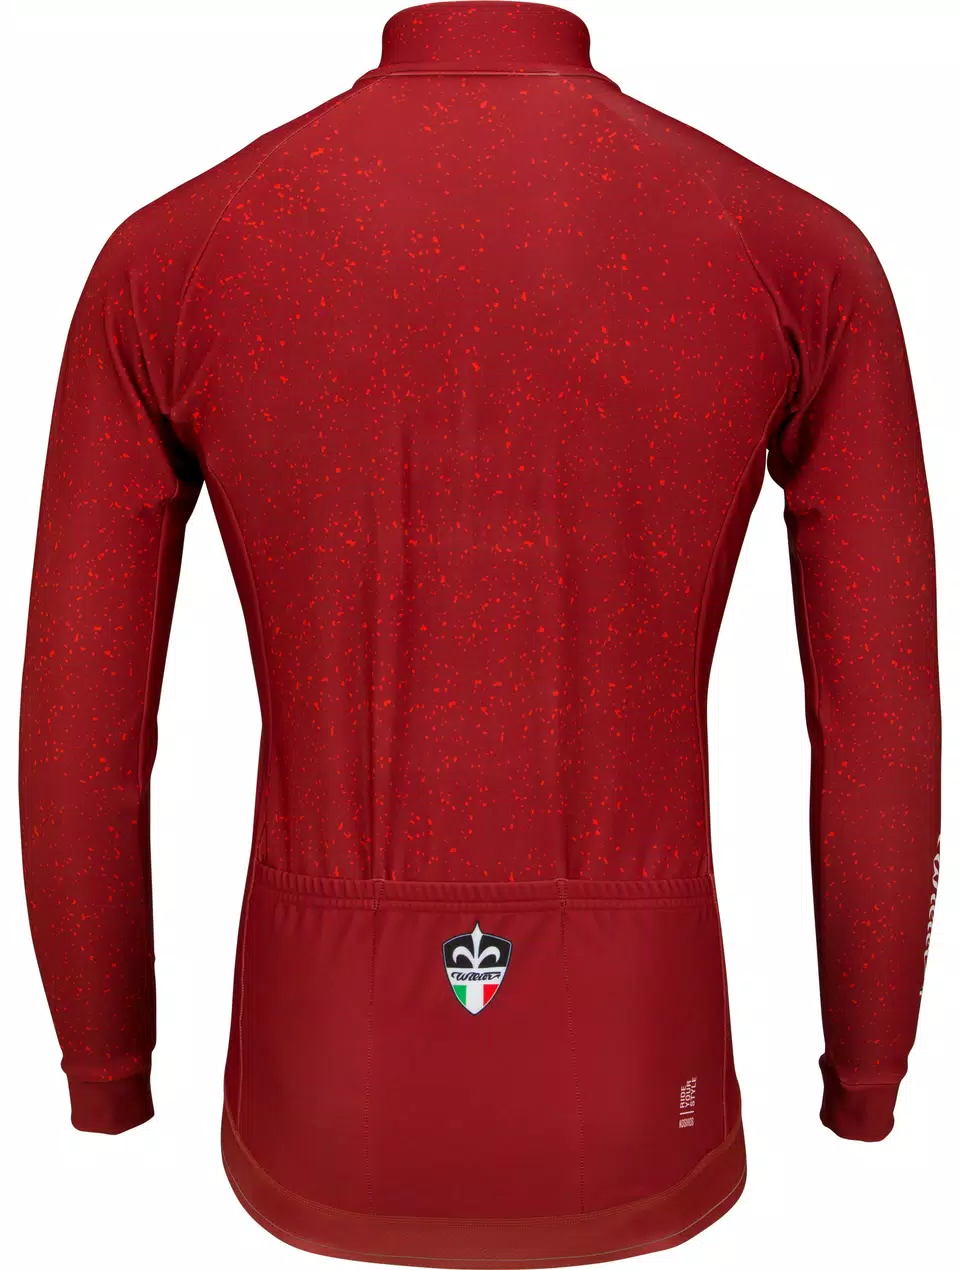 Long sleeve jersey Kosmos red